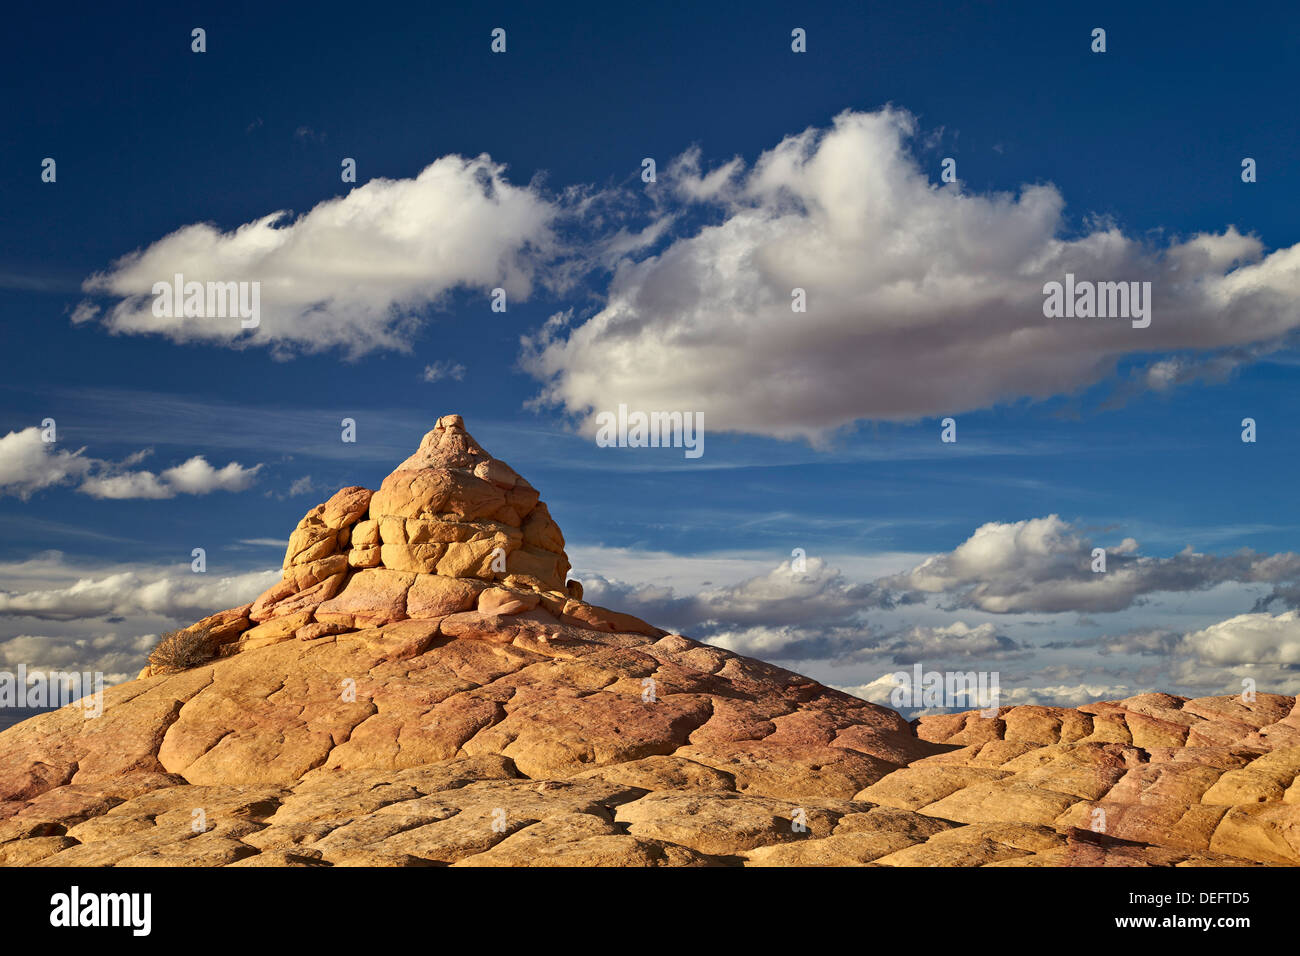 Sandstone formation under clouds, Coyote Buttes Wilderness, Vermillion Cliffs National Monument, Arizona, USA Stock Photo